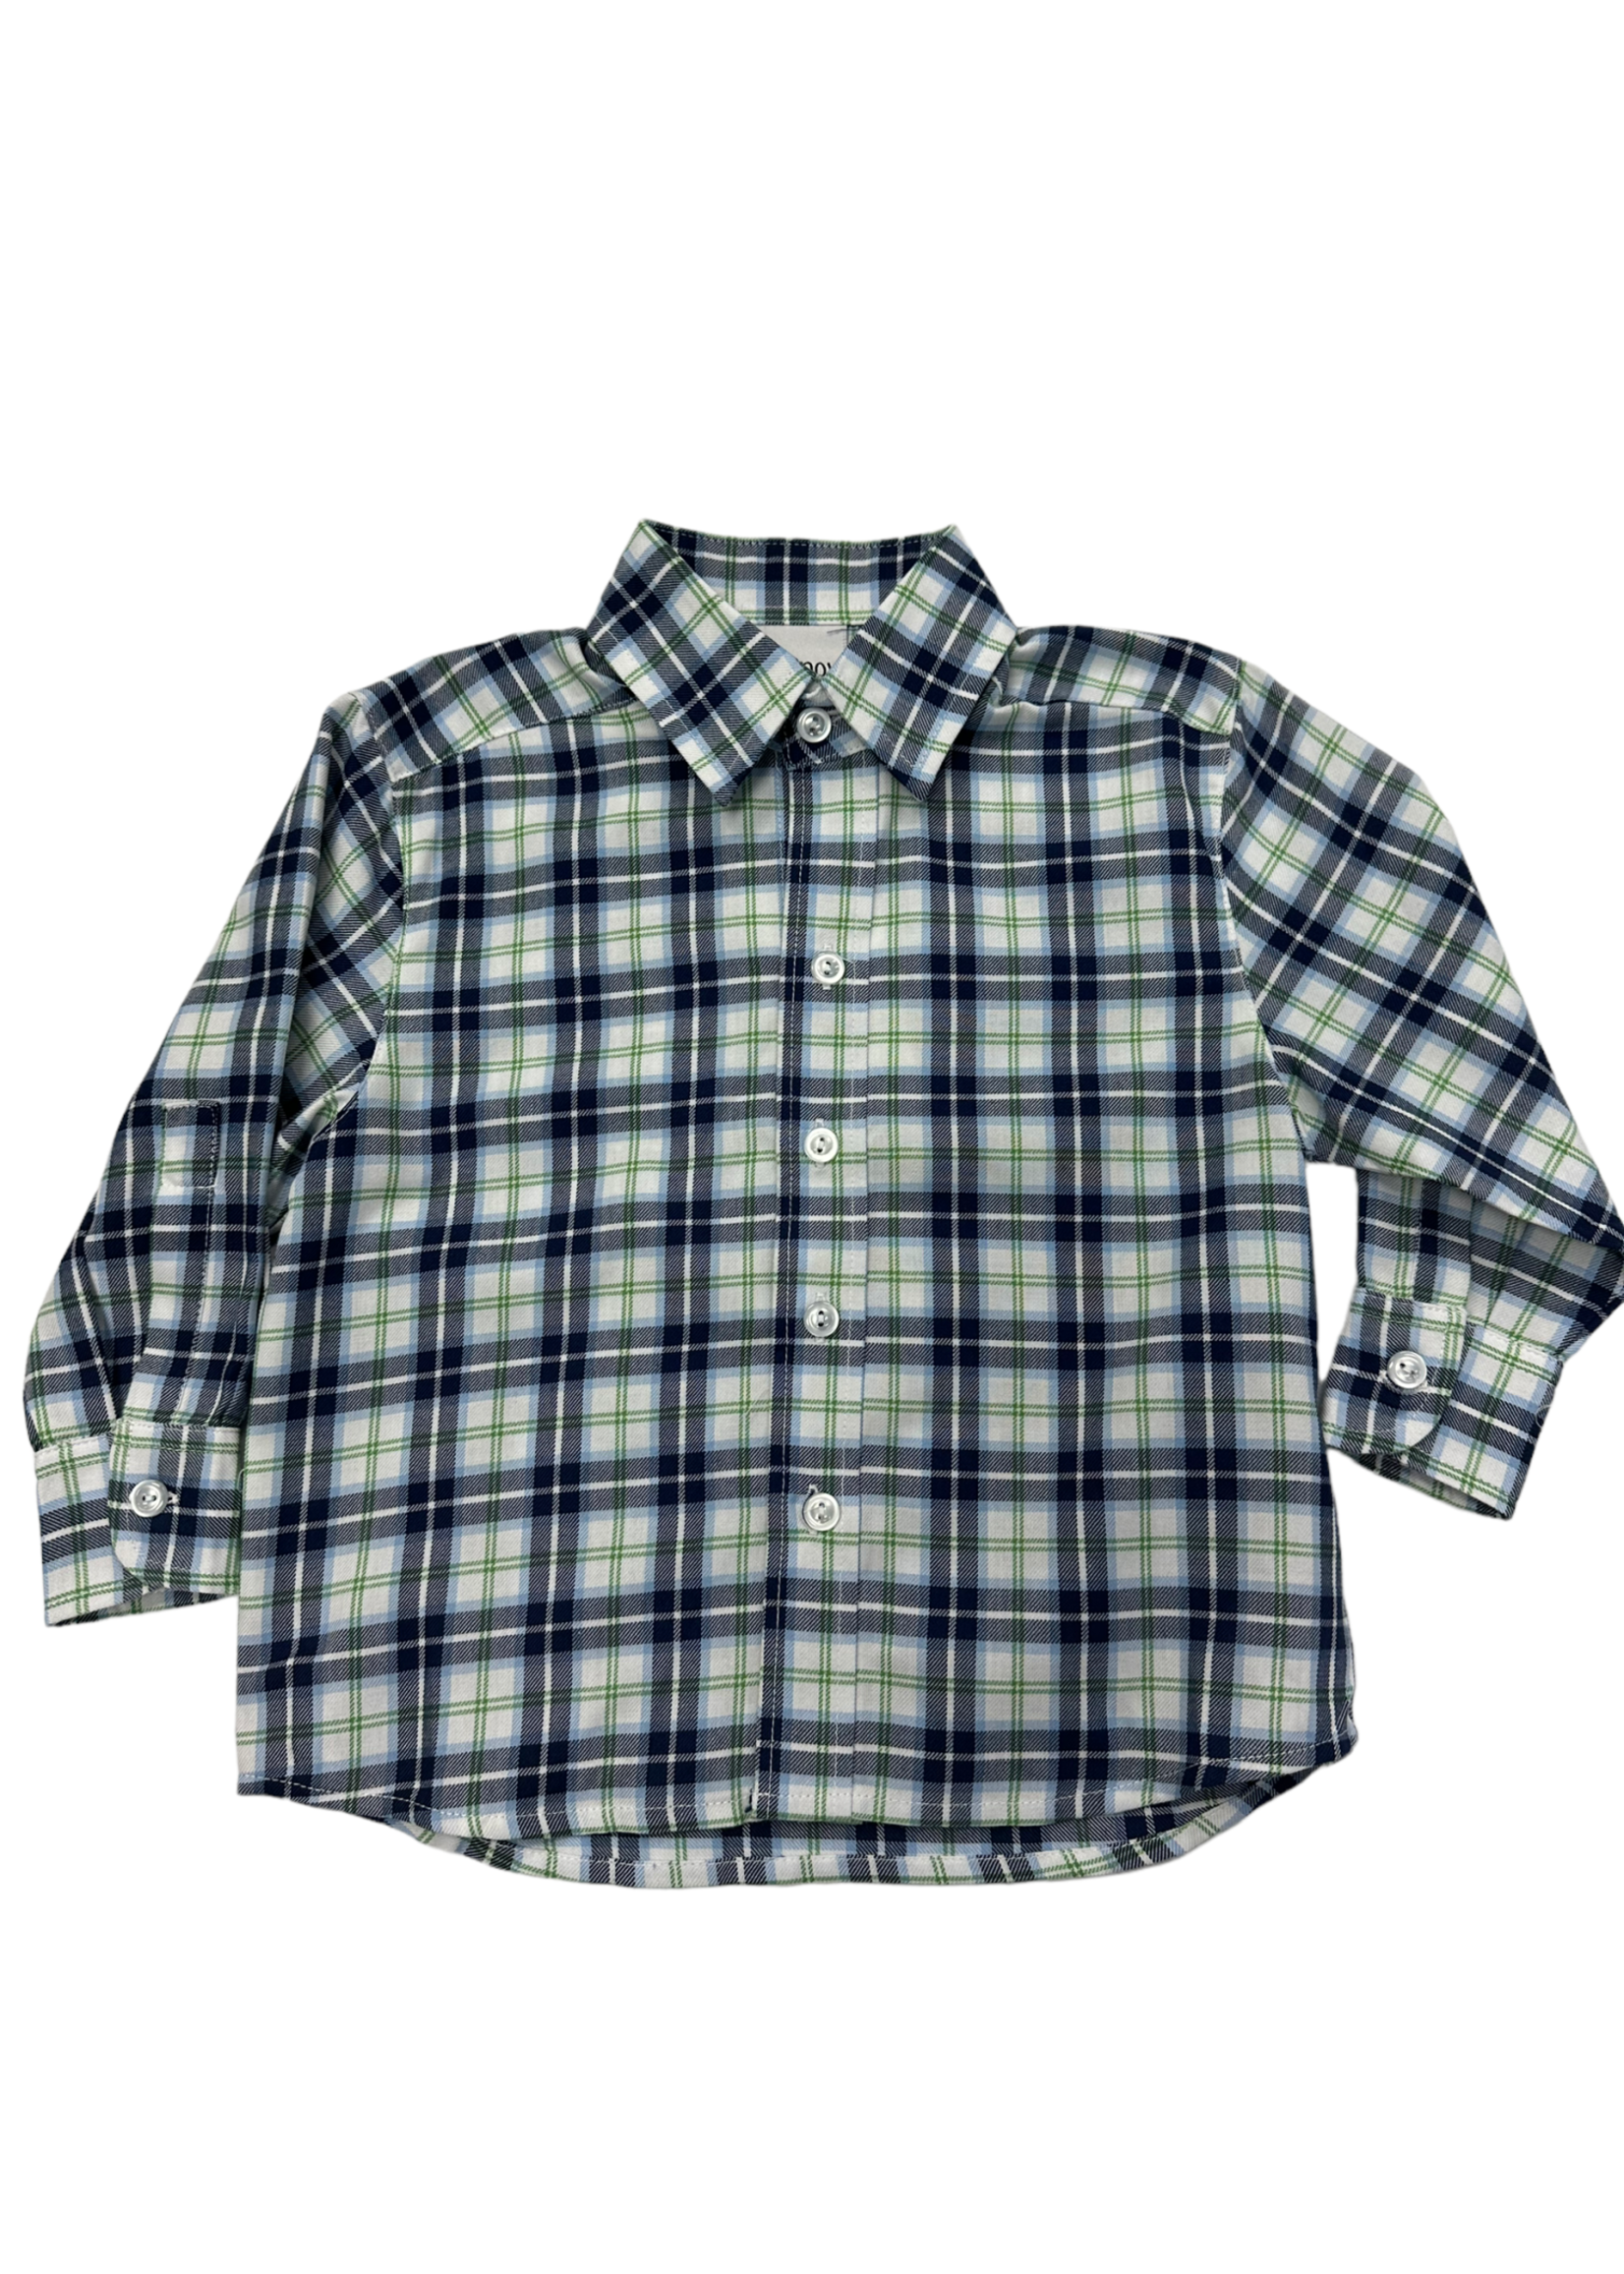 Delaney Boys Navy/Green Plaid Long Sleeve Button Shirt